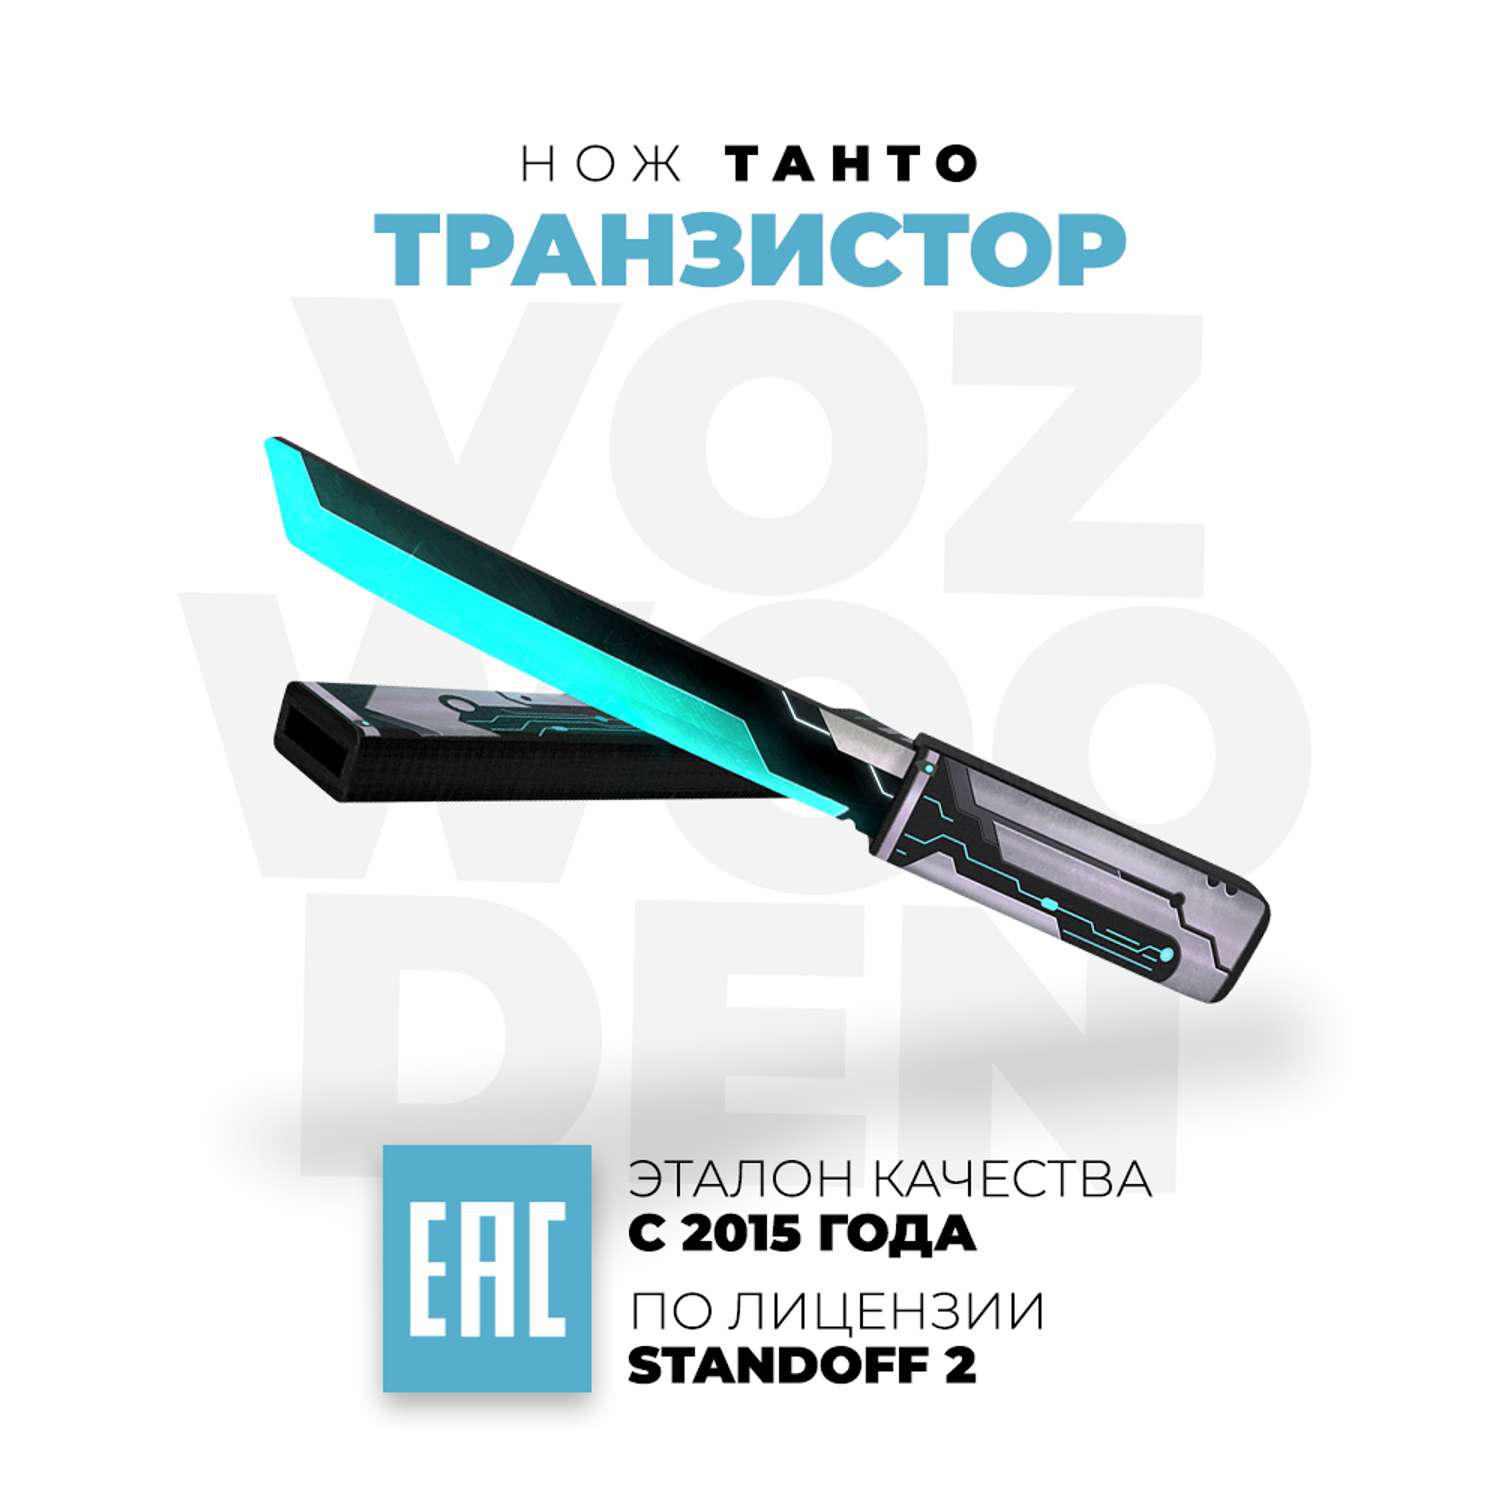 Нож Танто VozWooden Транзистор Стандофф 2 деревянный - фото 1